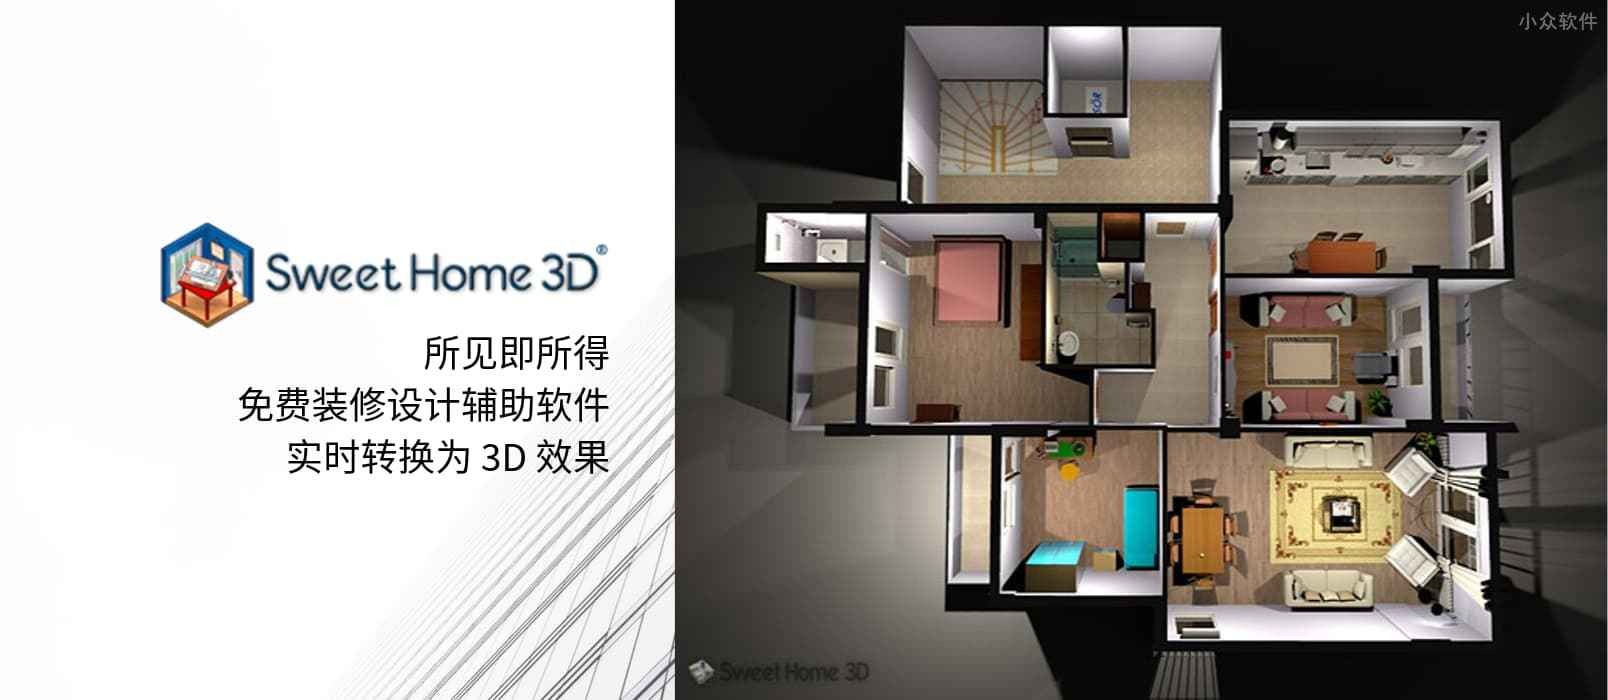 Sweet Home 3D - 拖拽就能创建 3D 效果的装修图，免费开源很好用 1